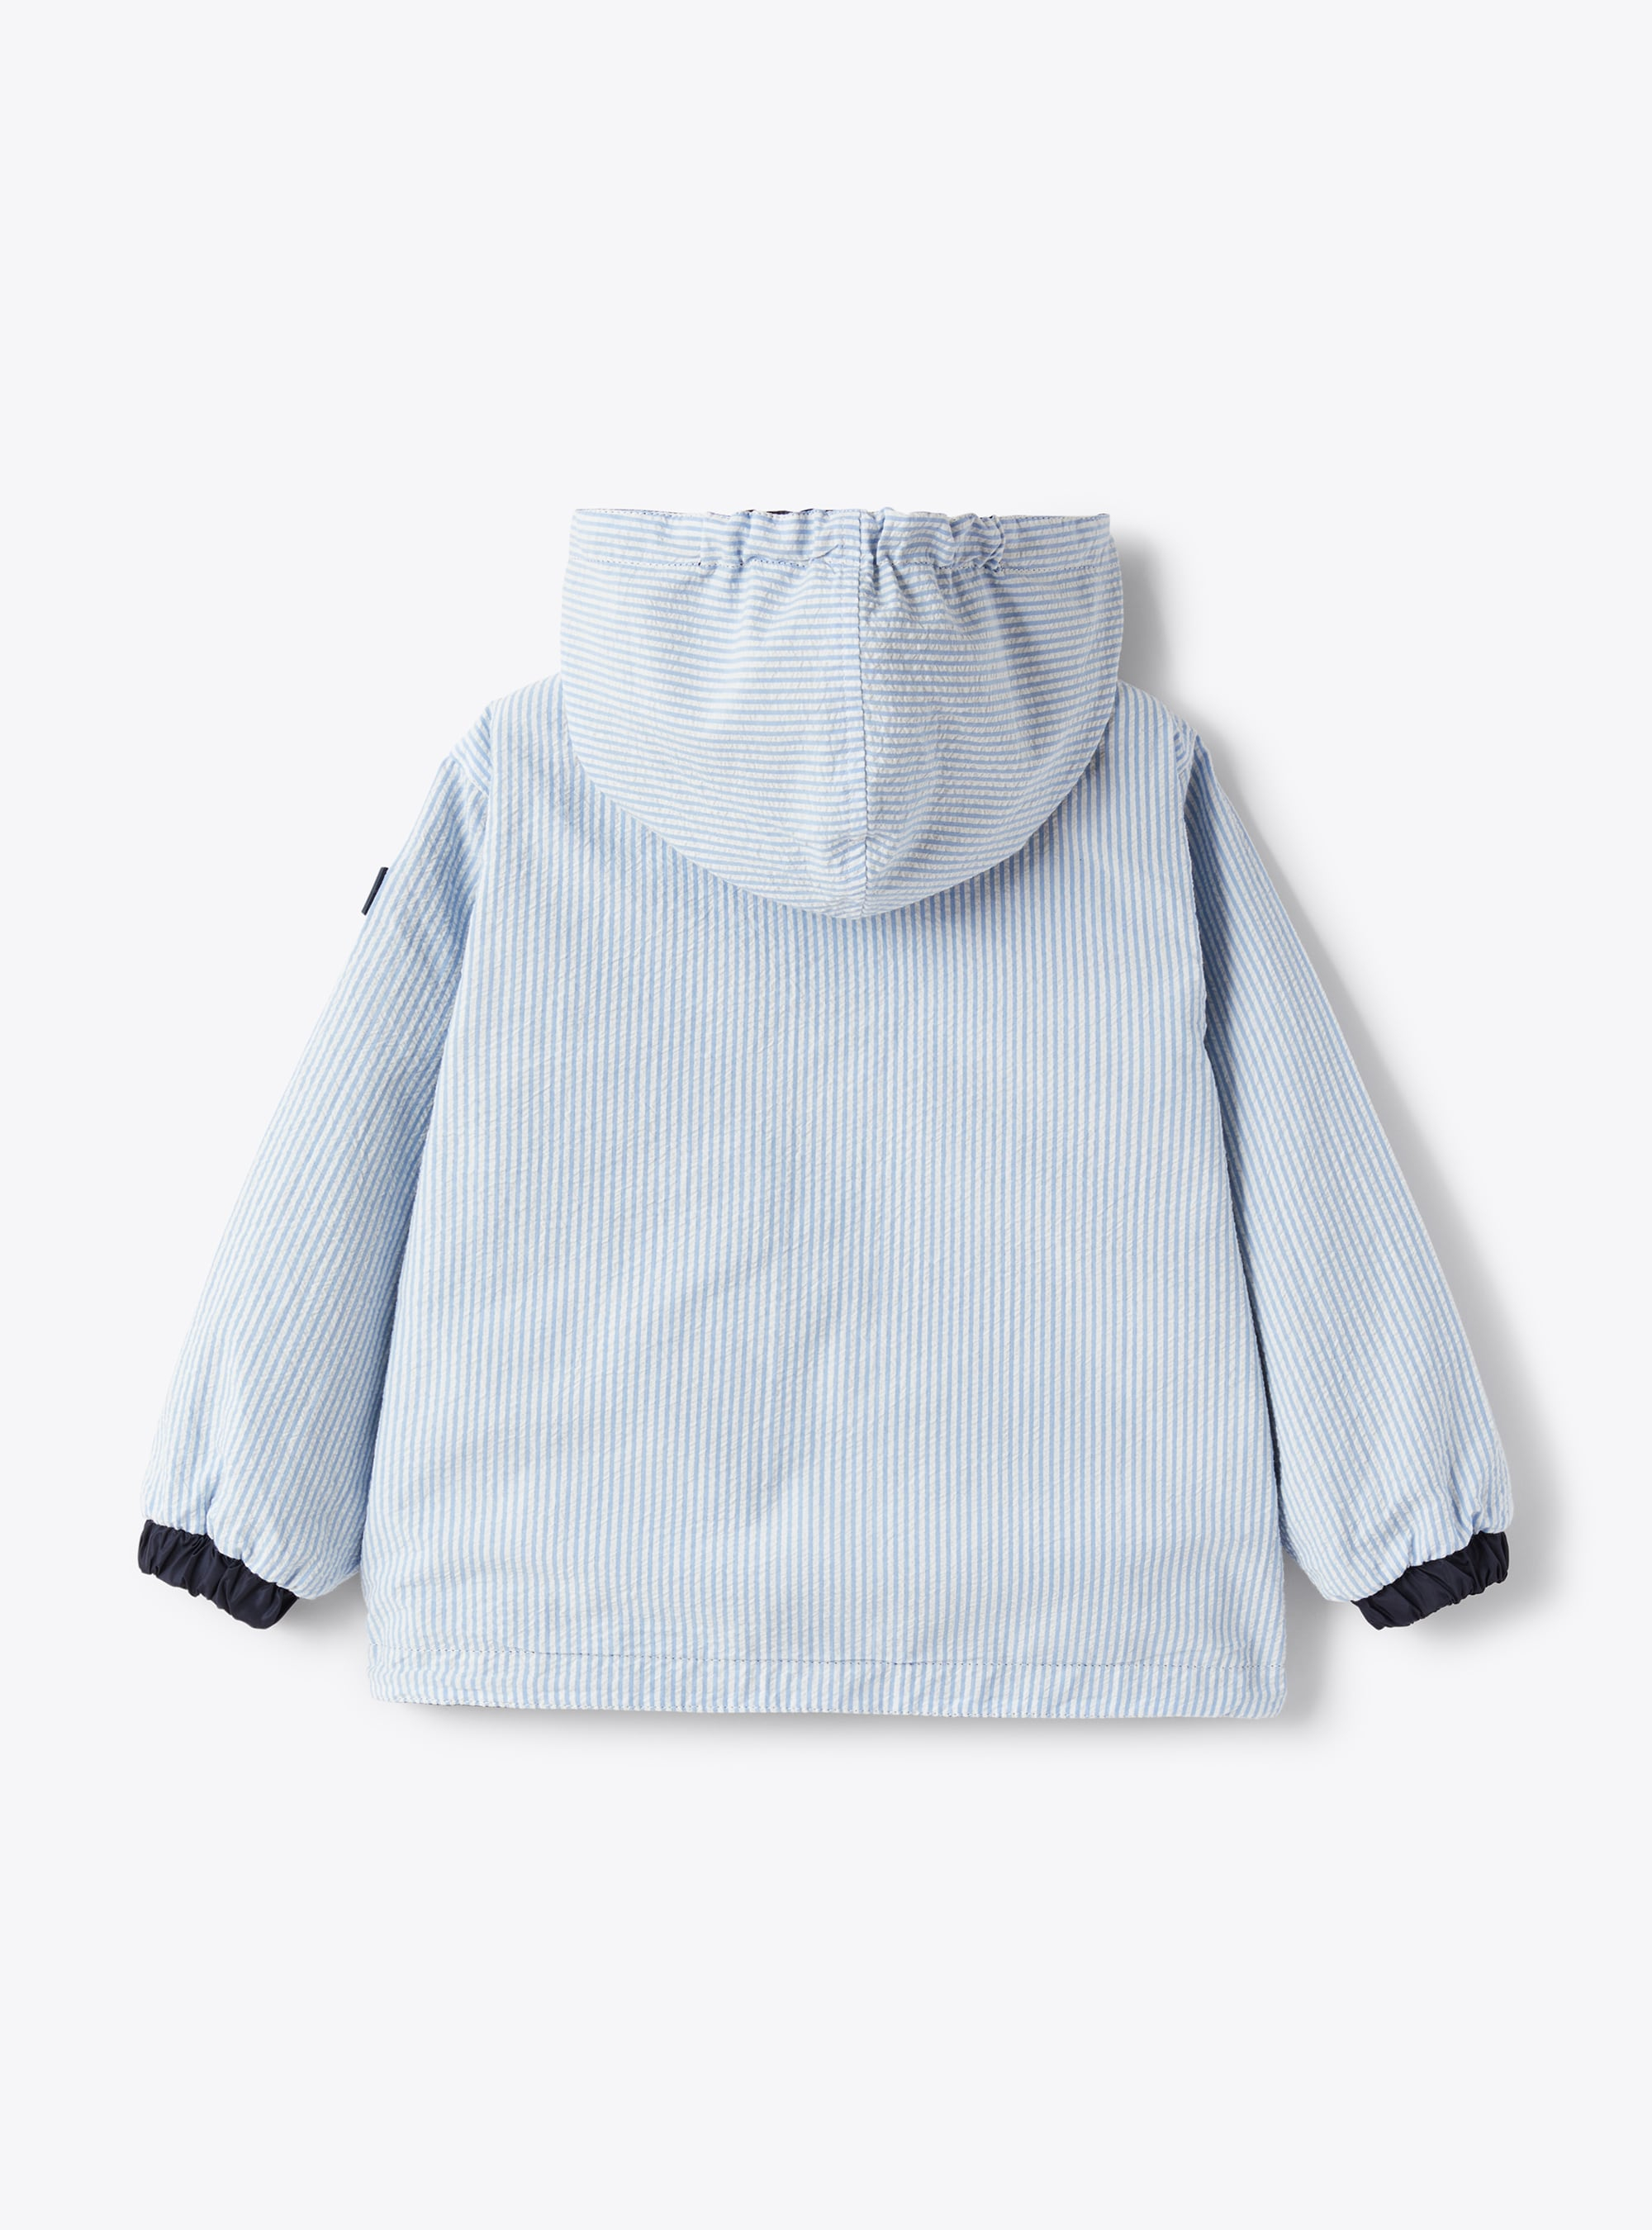 Reversible jacket in seersucker and nylon - Light blue | Il Gufo